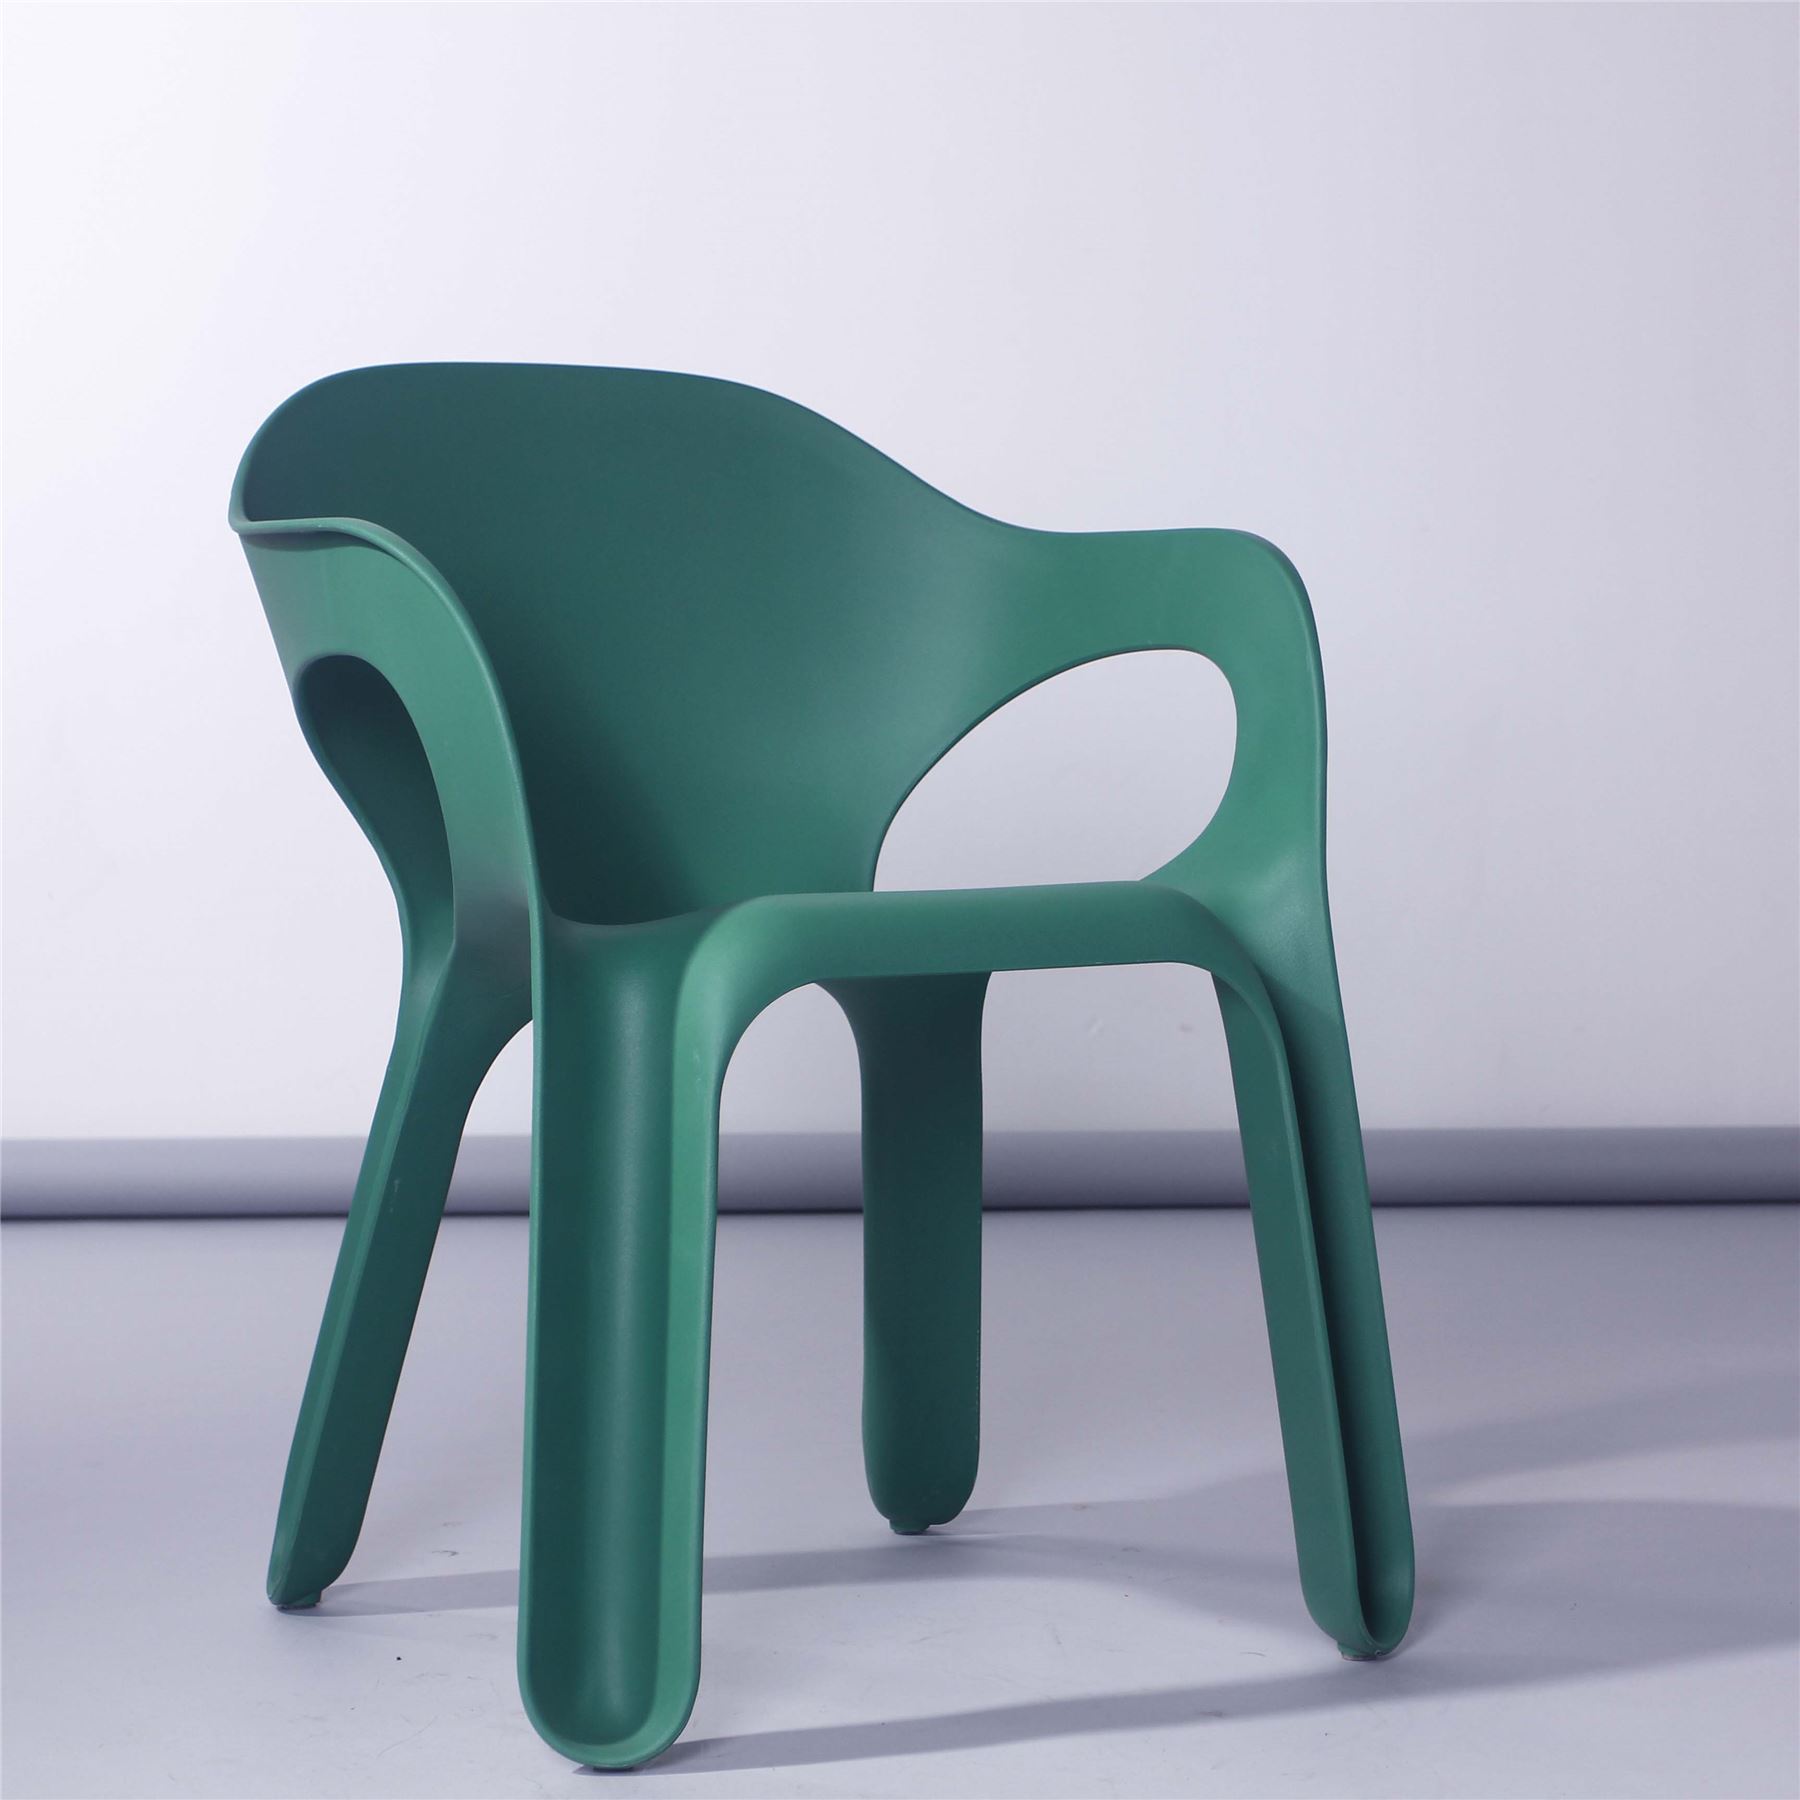 plastic garden chairs replica-of-magis-easy-chair-garden-furniture-chair- SAYZRAK